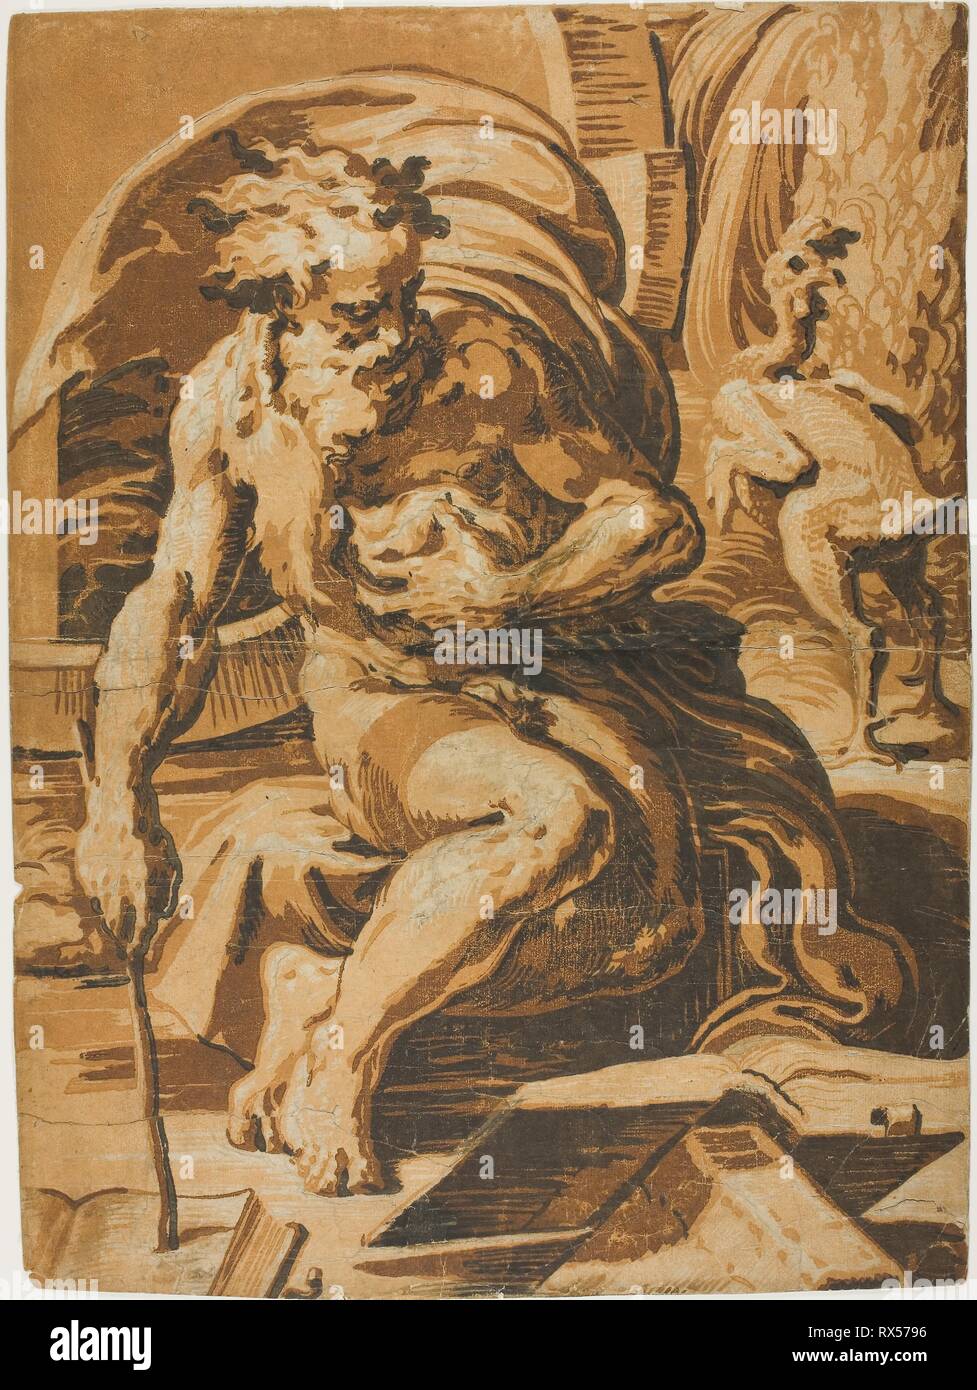 Diogenes. Ugo da Carpi (Italian, c. 1480-1535); or after Parmigianino (Italian, 1503-1540). Date: 1520-1530. Dimensions: 460 x 341 mm. Chiaroscuro woodcut from three blocks on ivory laid paper. Origin: Italy. Museum: The Chicago Art Institute. Stock Photo